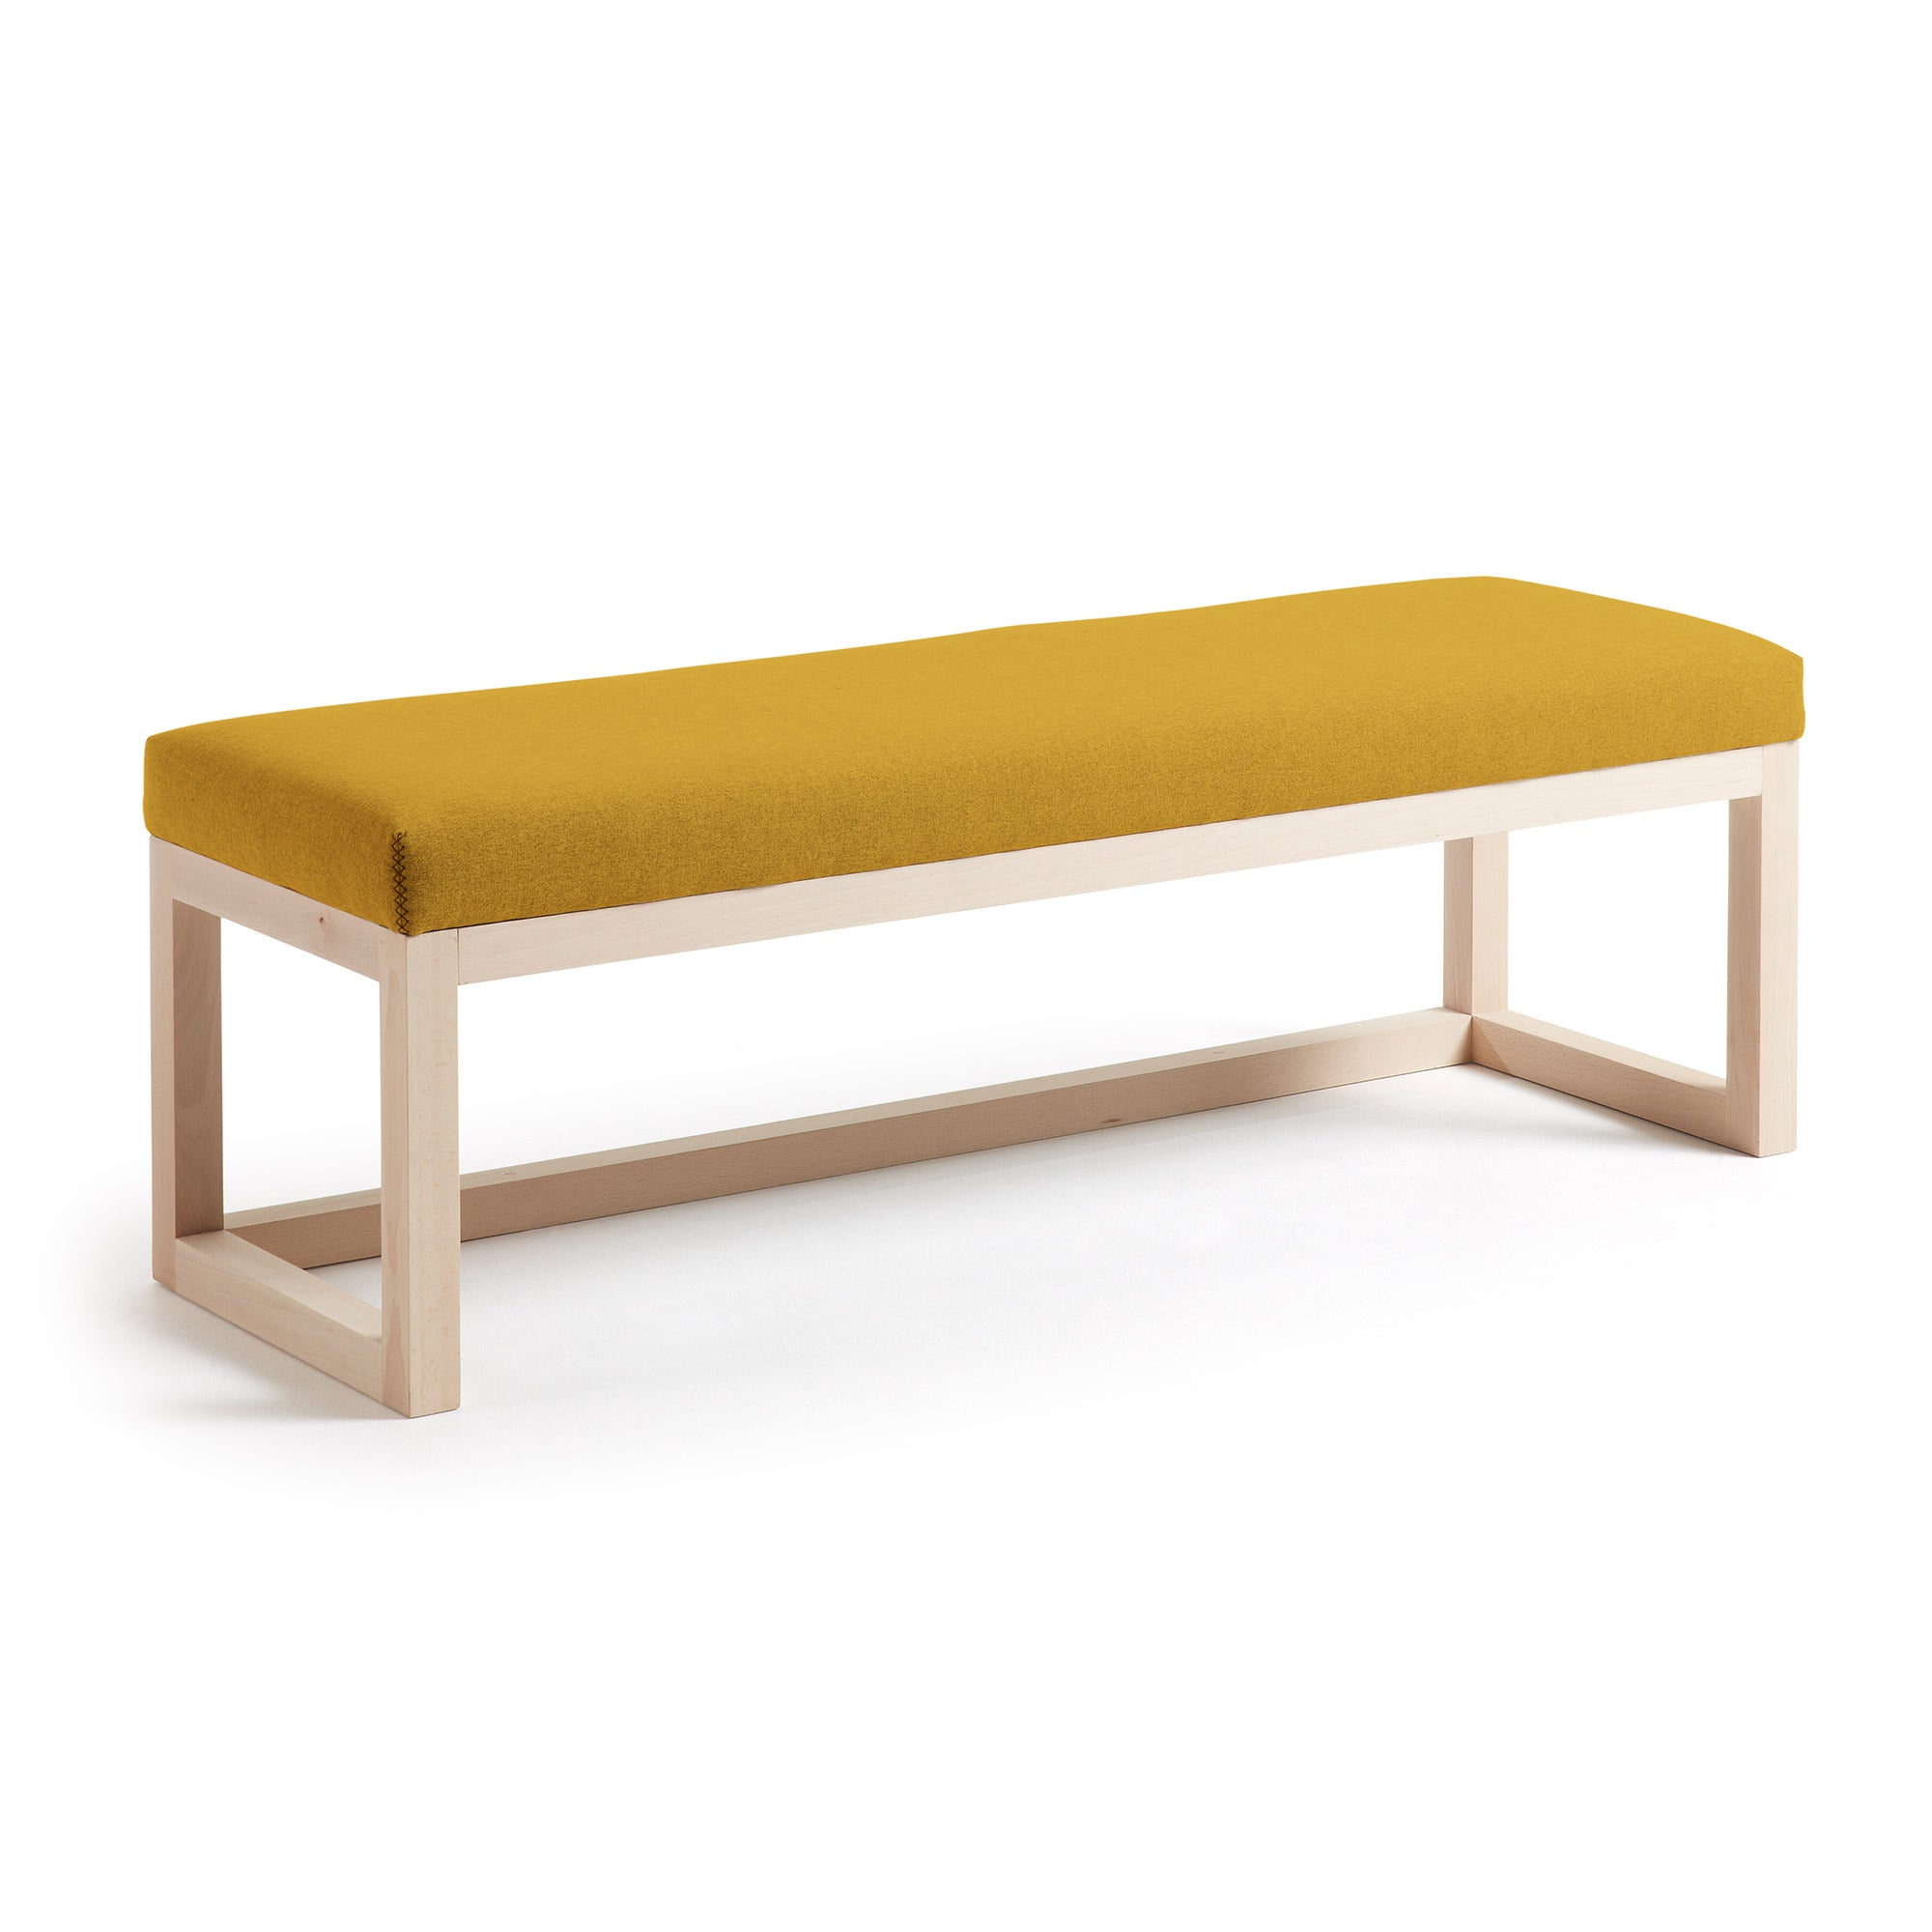 Loya solid beech wood bench in mustard, 128 cm